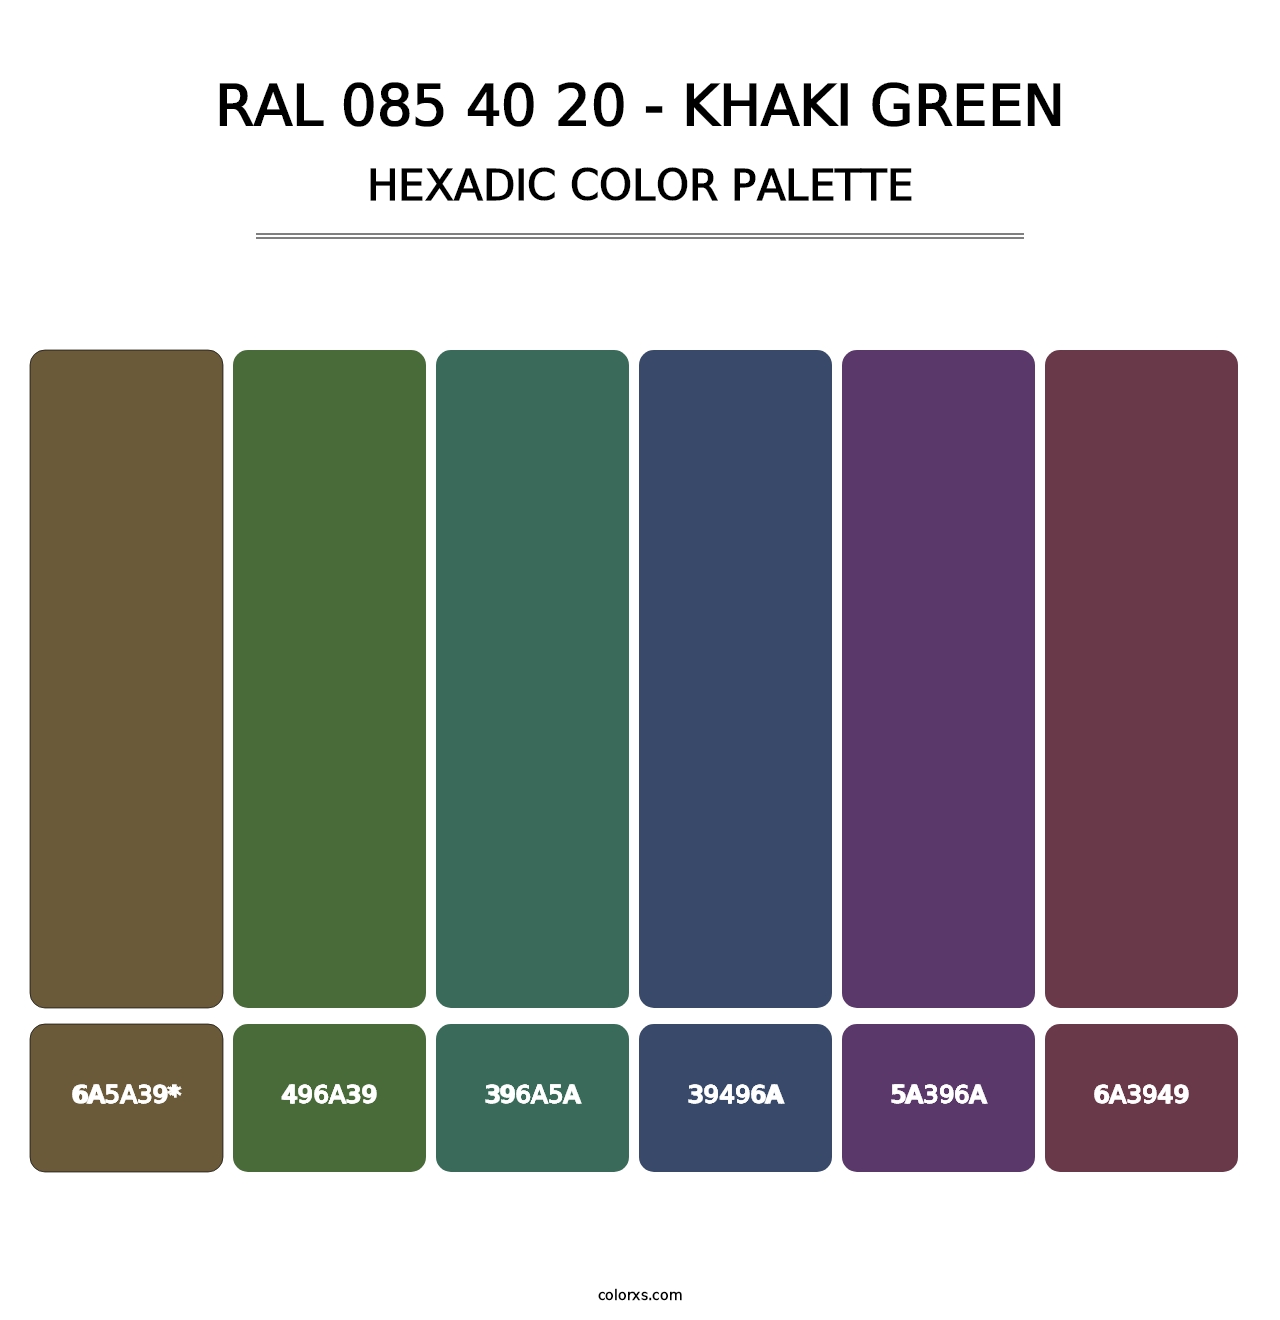 RAL 085 40 20 - Khaki Green - Hexadic Color Palette